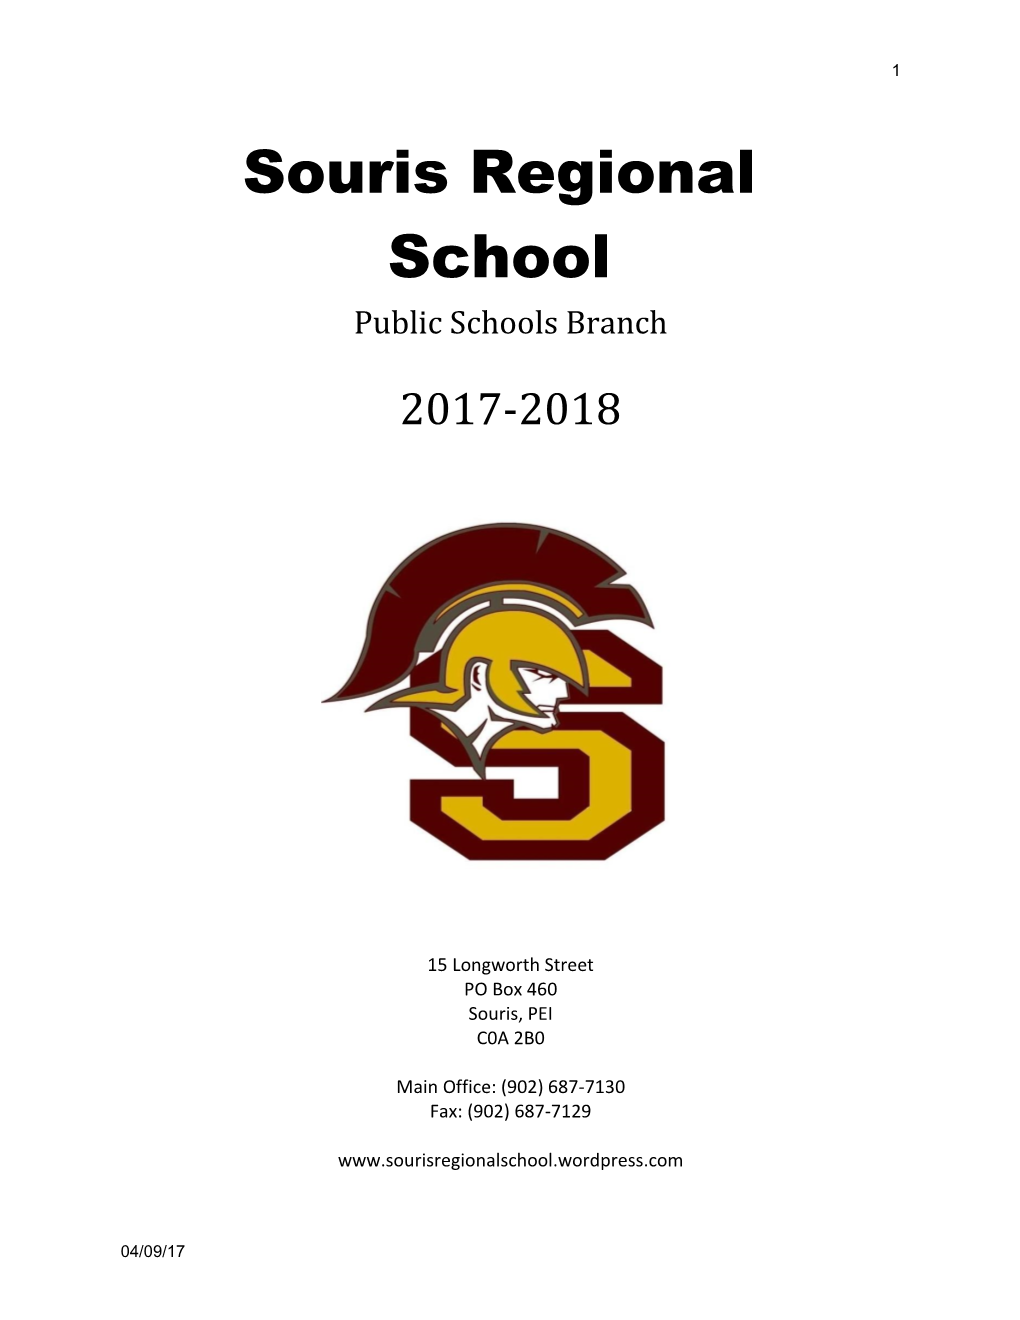 Souris Regional School